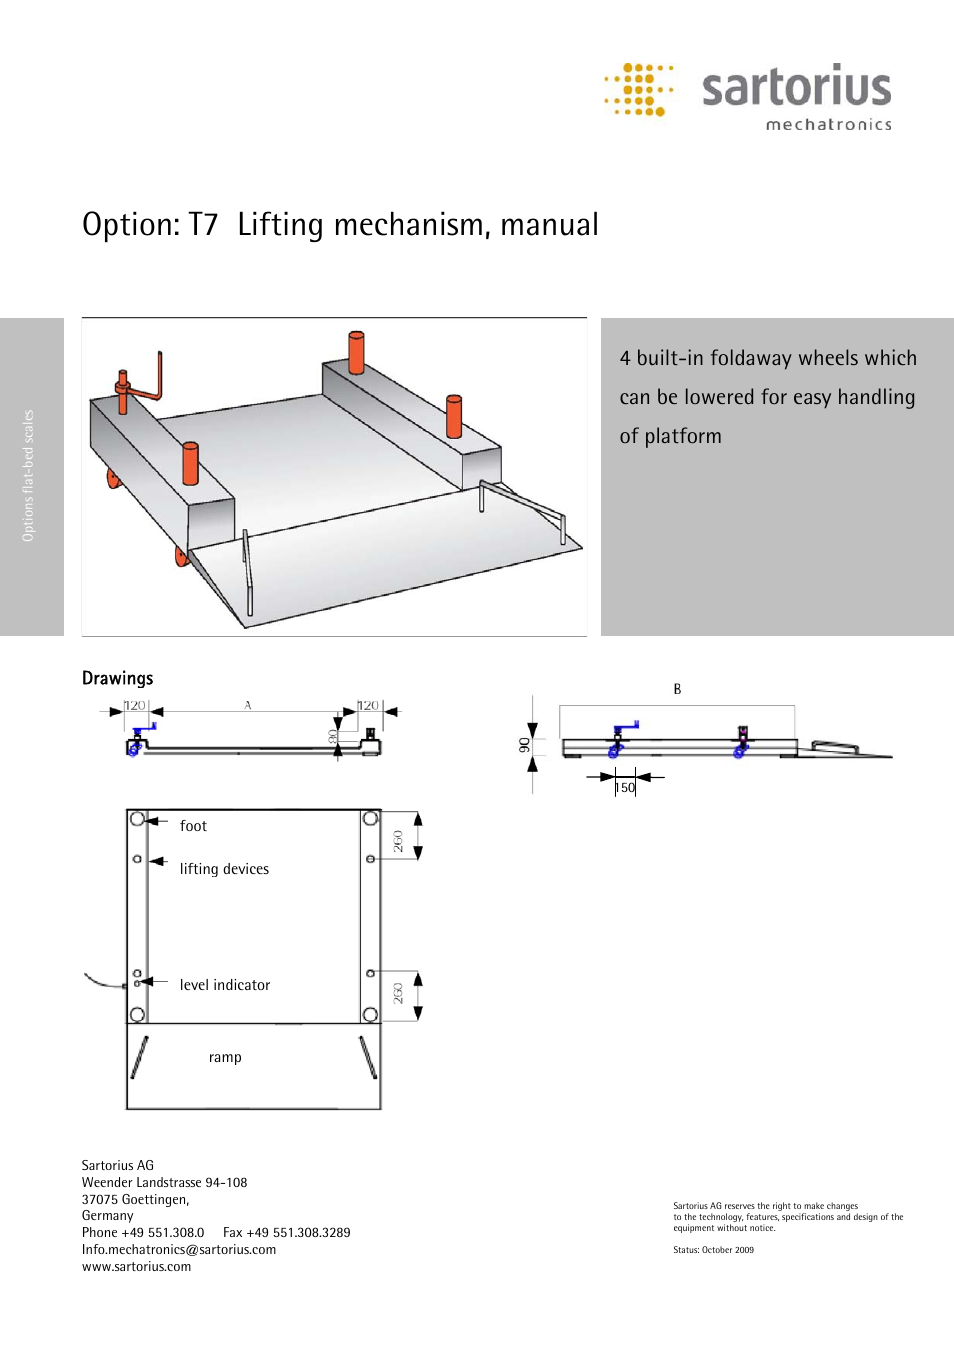 IF Platform 6600 lb Capacity - Option Lifting Mechanism